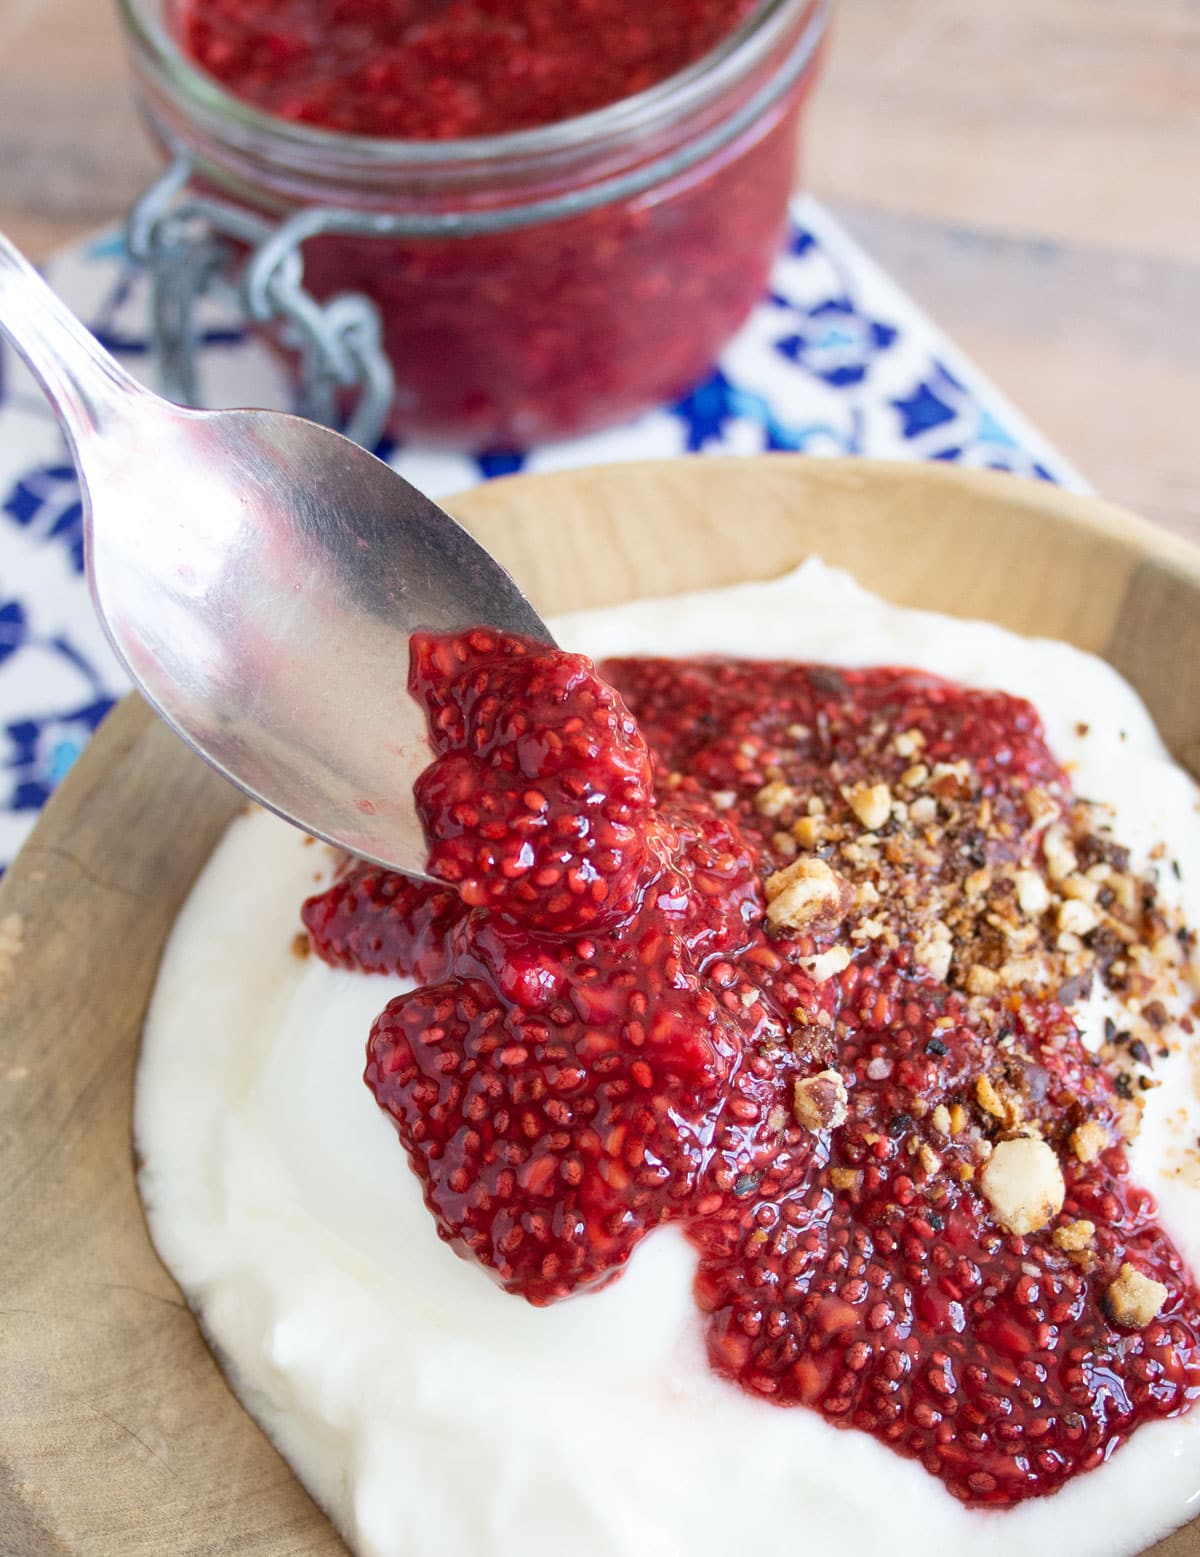 Spooning raspberry jam onto a bowl with yogurt.